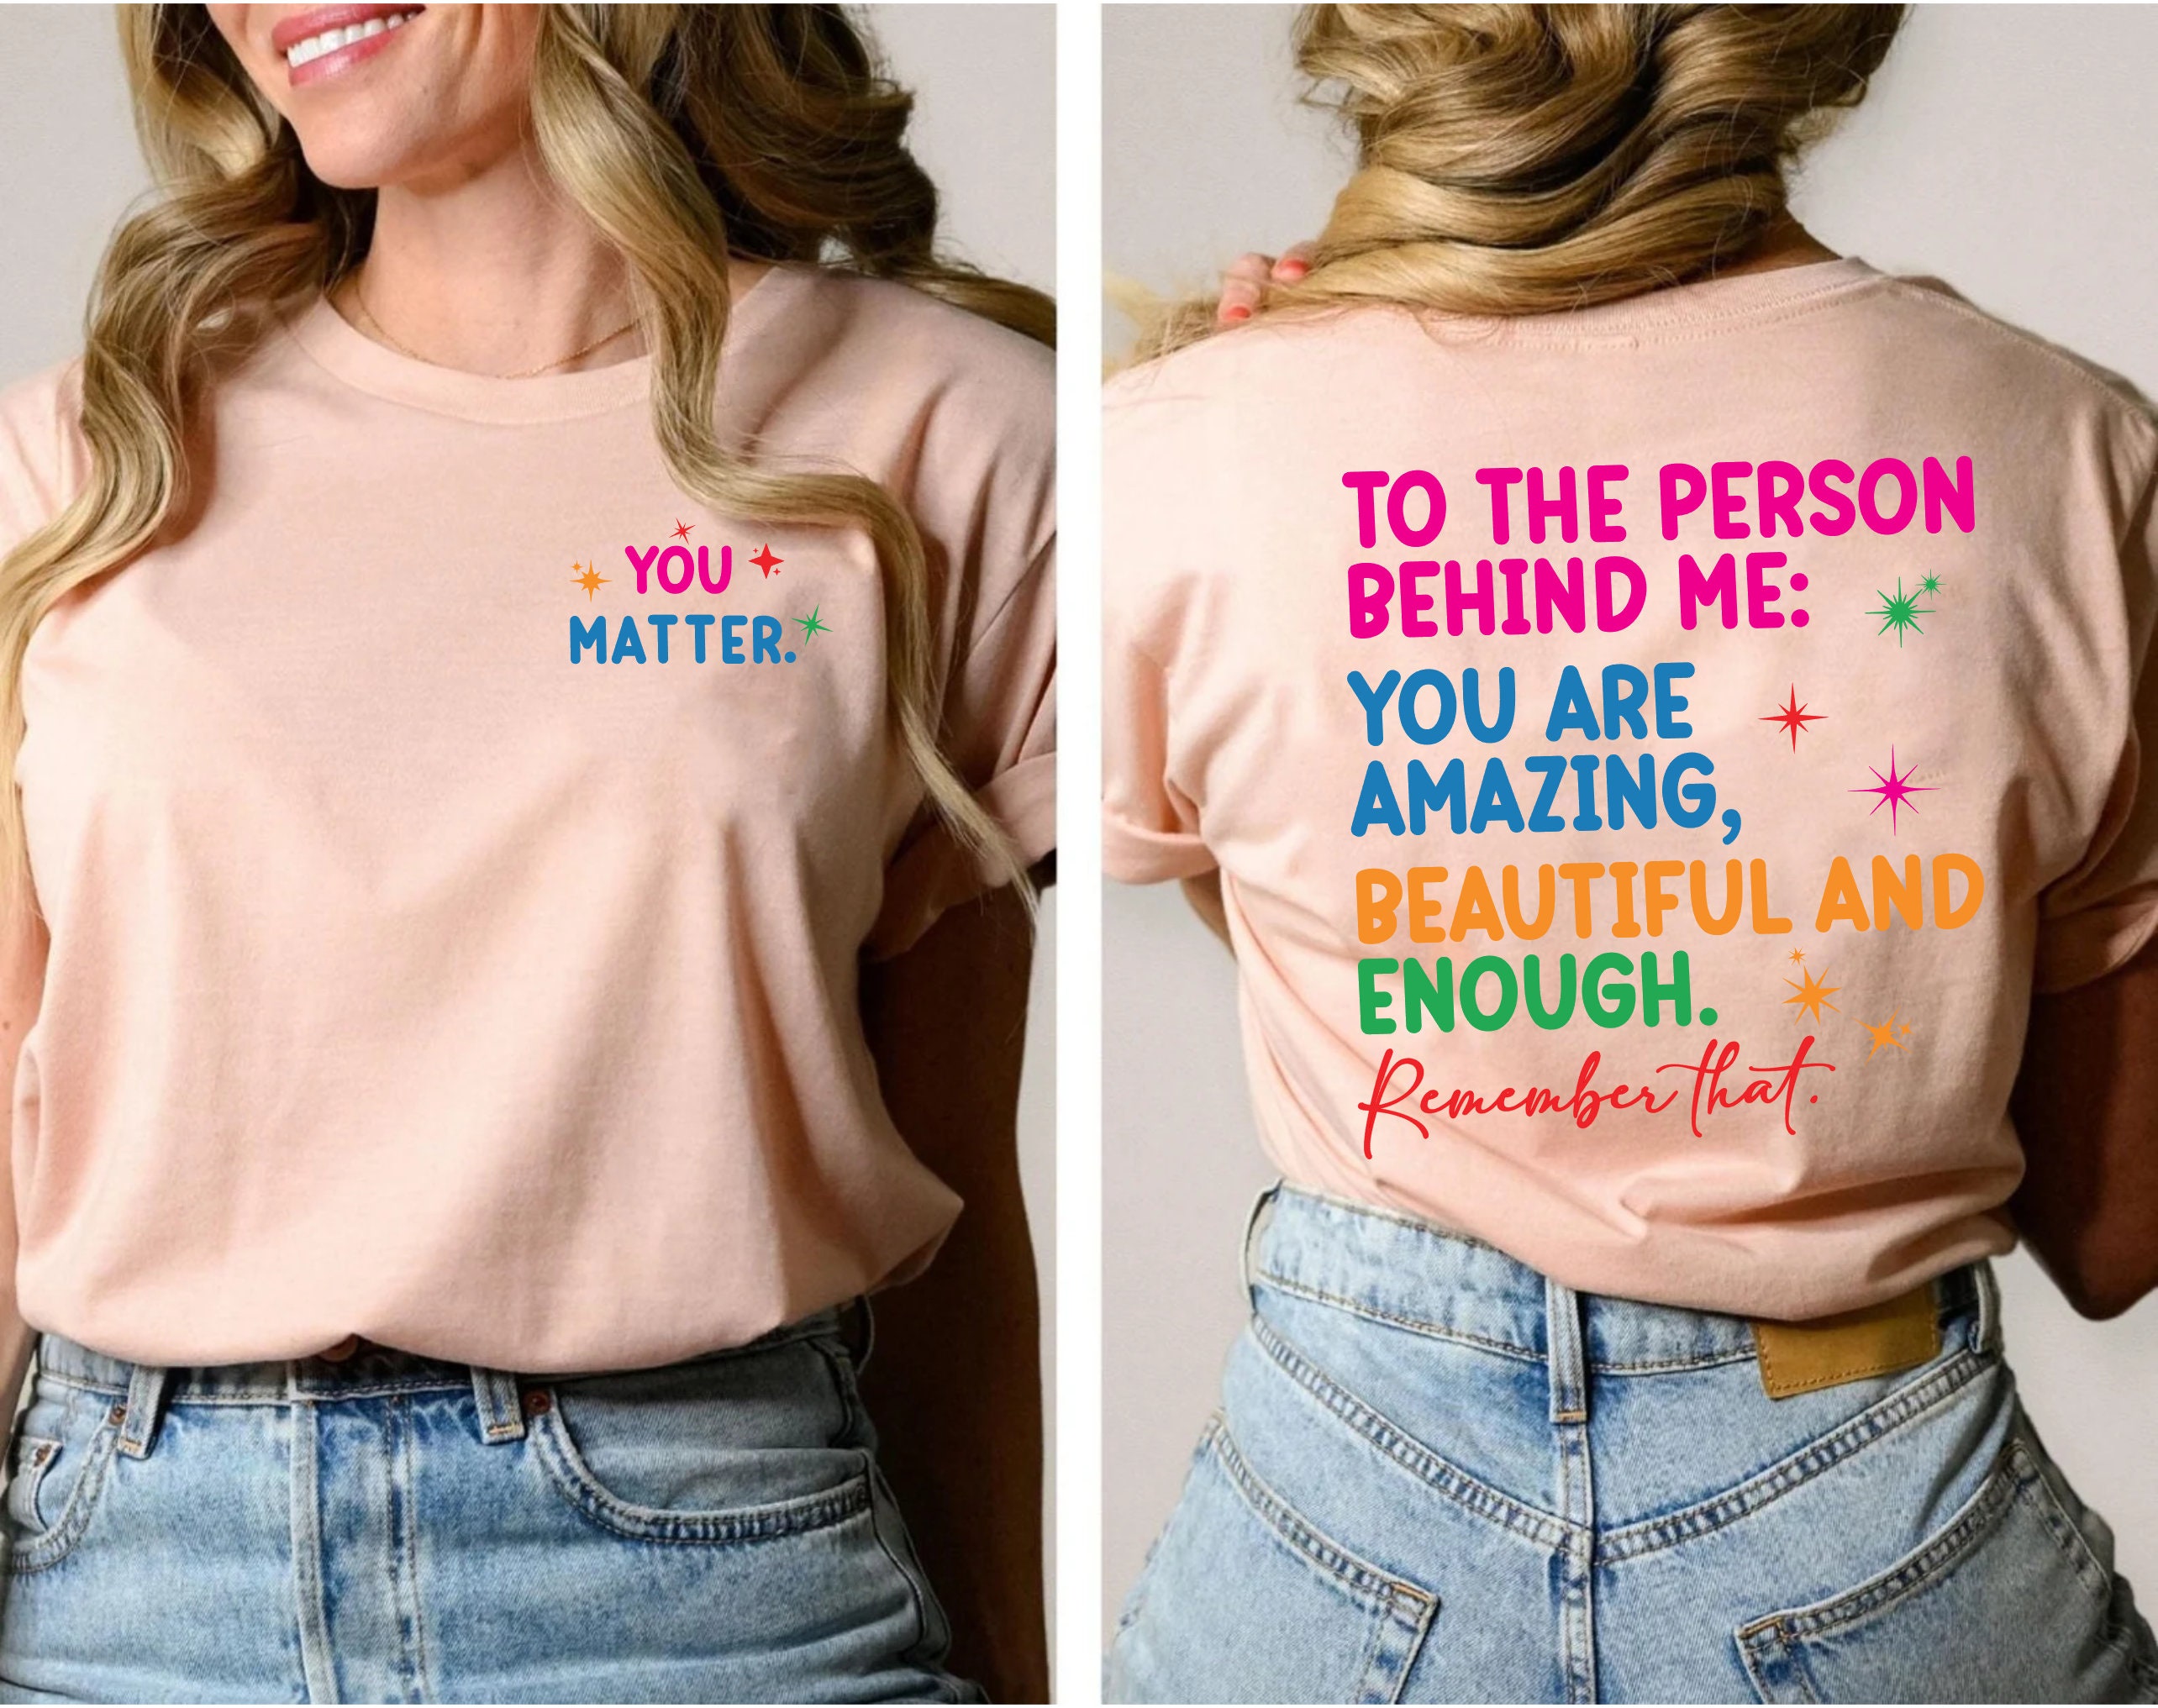 Discover Dear Person Behind Me Shirt, You Matter Shirt, You Are Enough Shirt, Mental Health Matters Shirt, Kindness Shirt